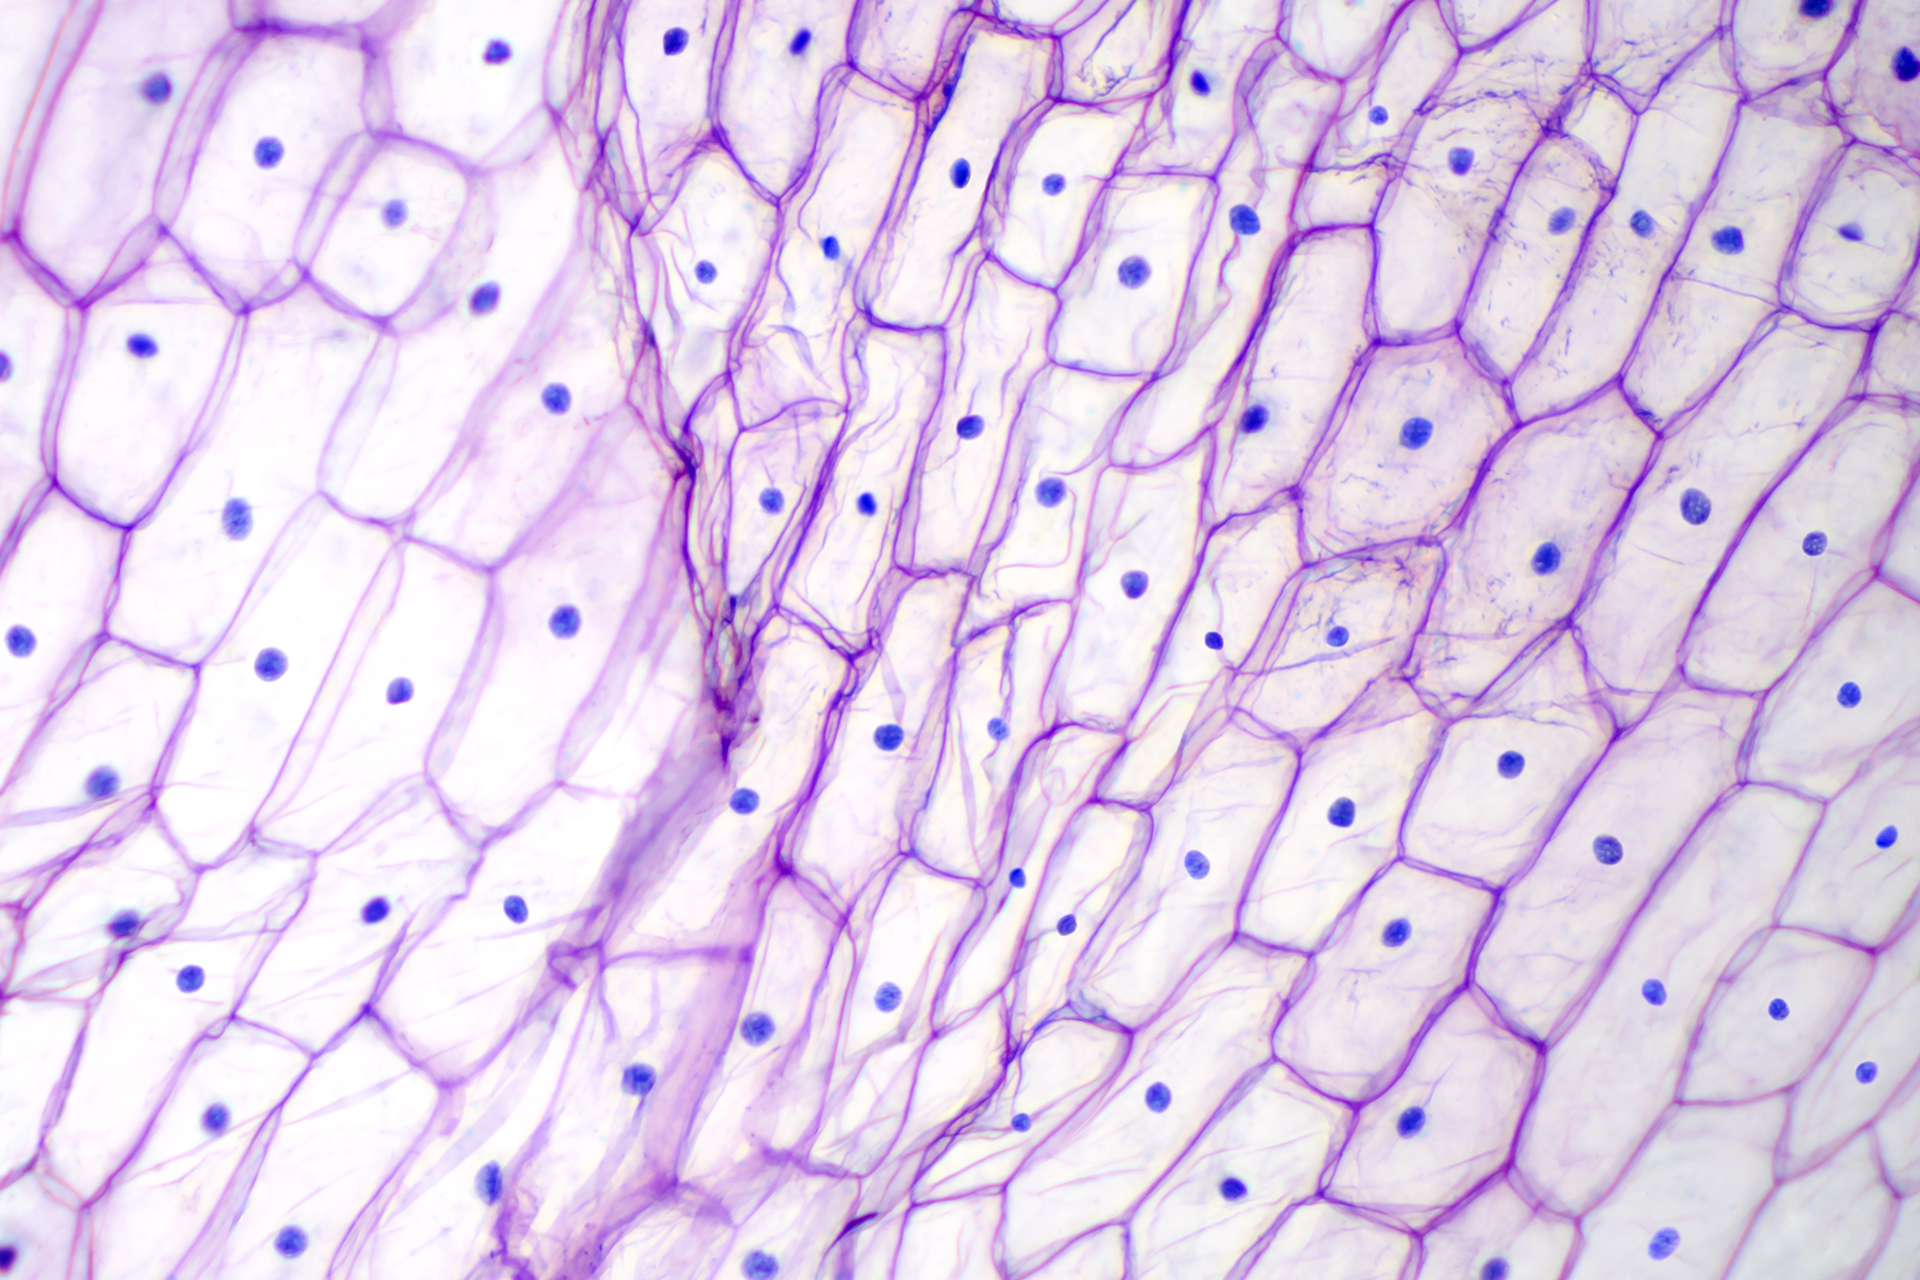 Эпидермис чешуи лука под микроскопом